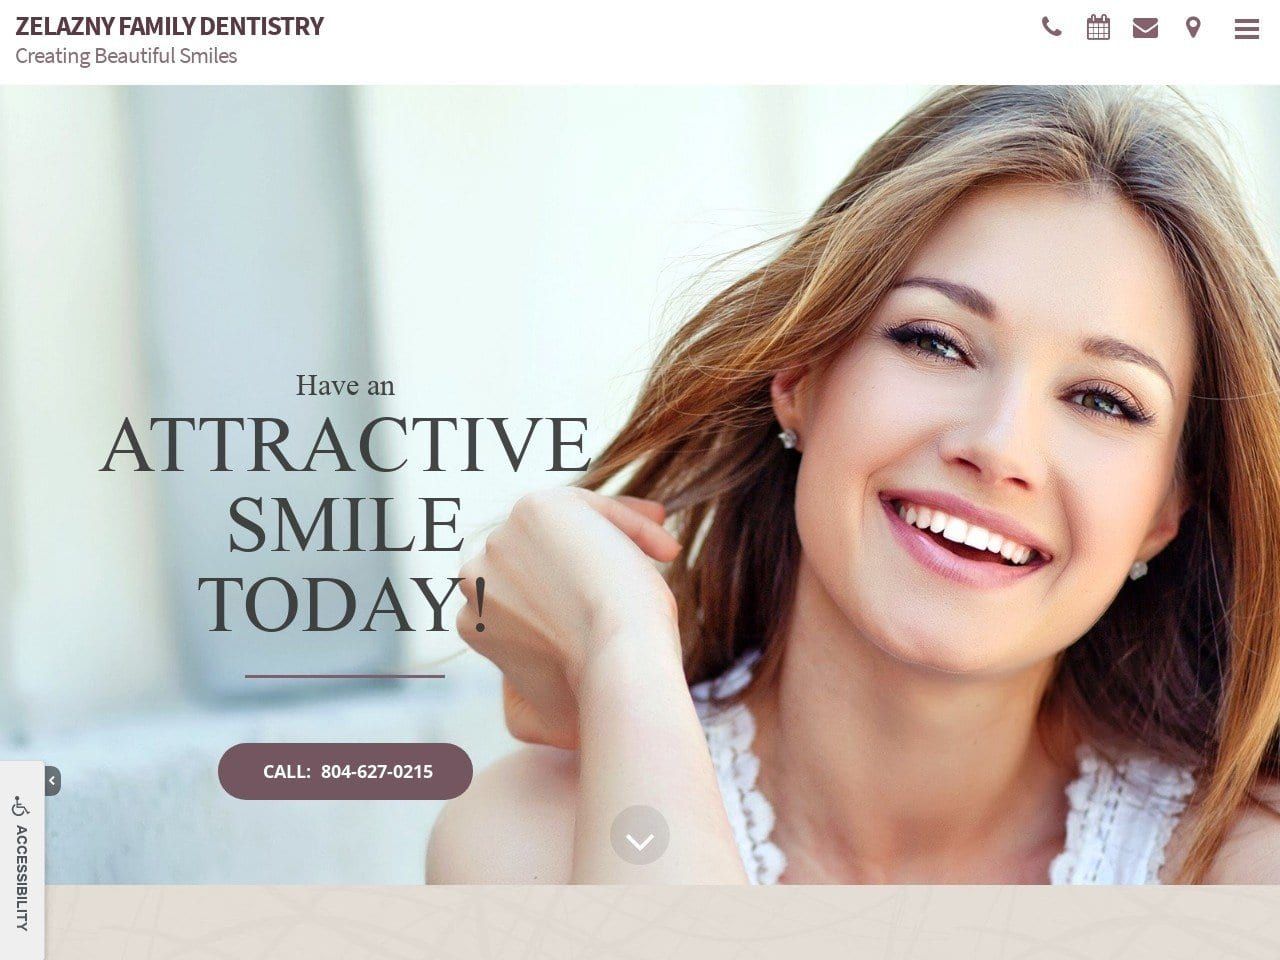 Zelazny Dentistry Website Screenshot from zelaznydentistry.com